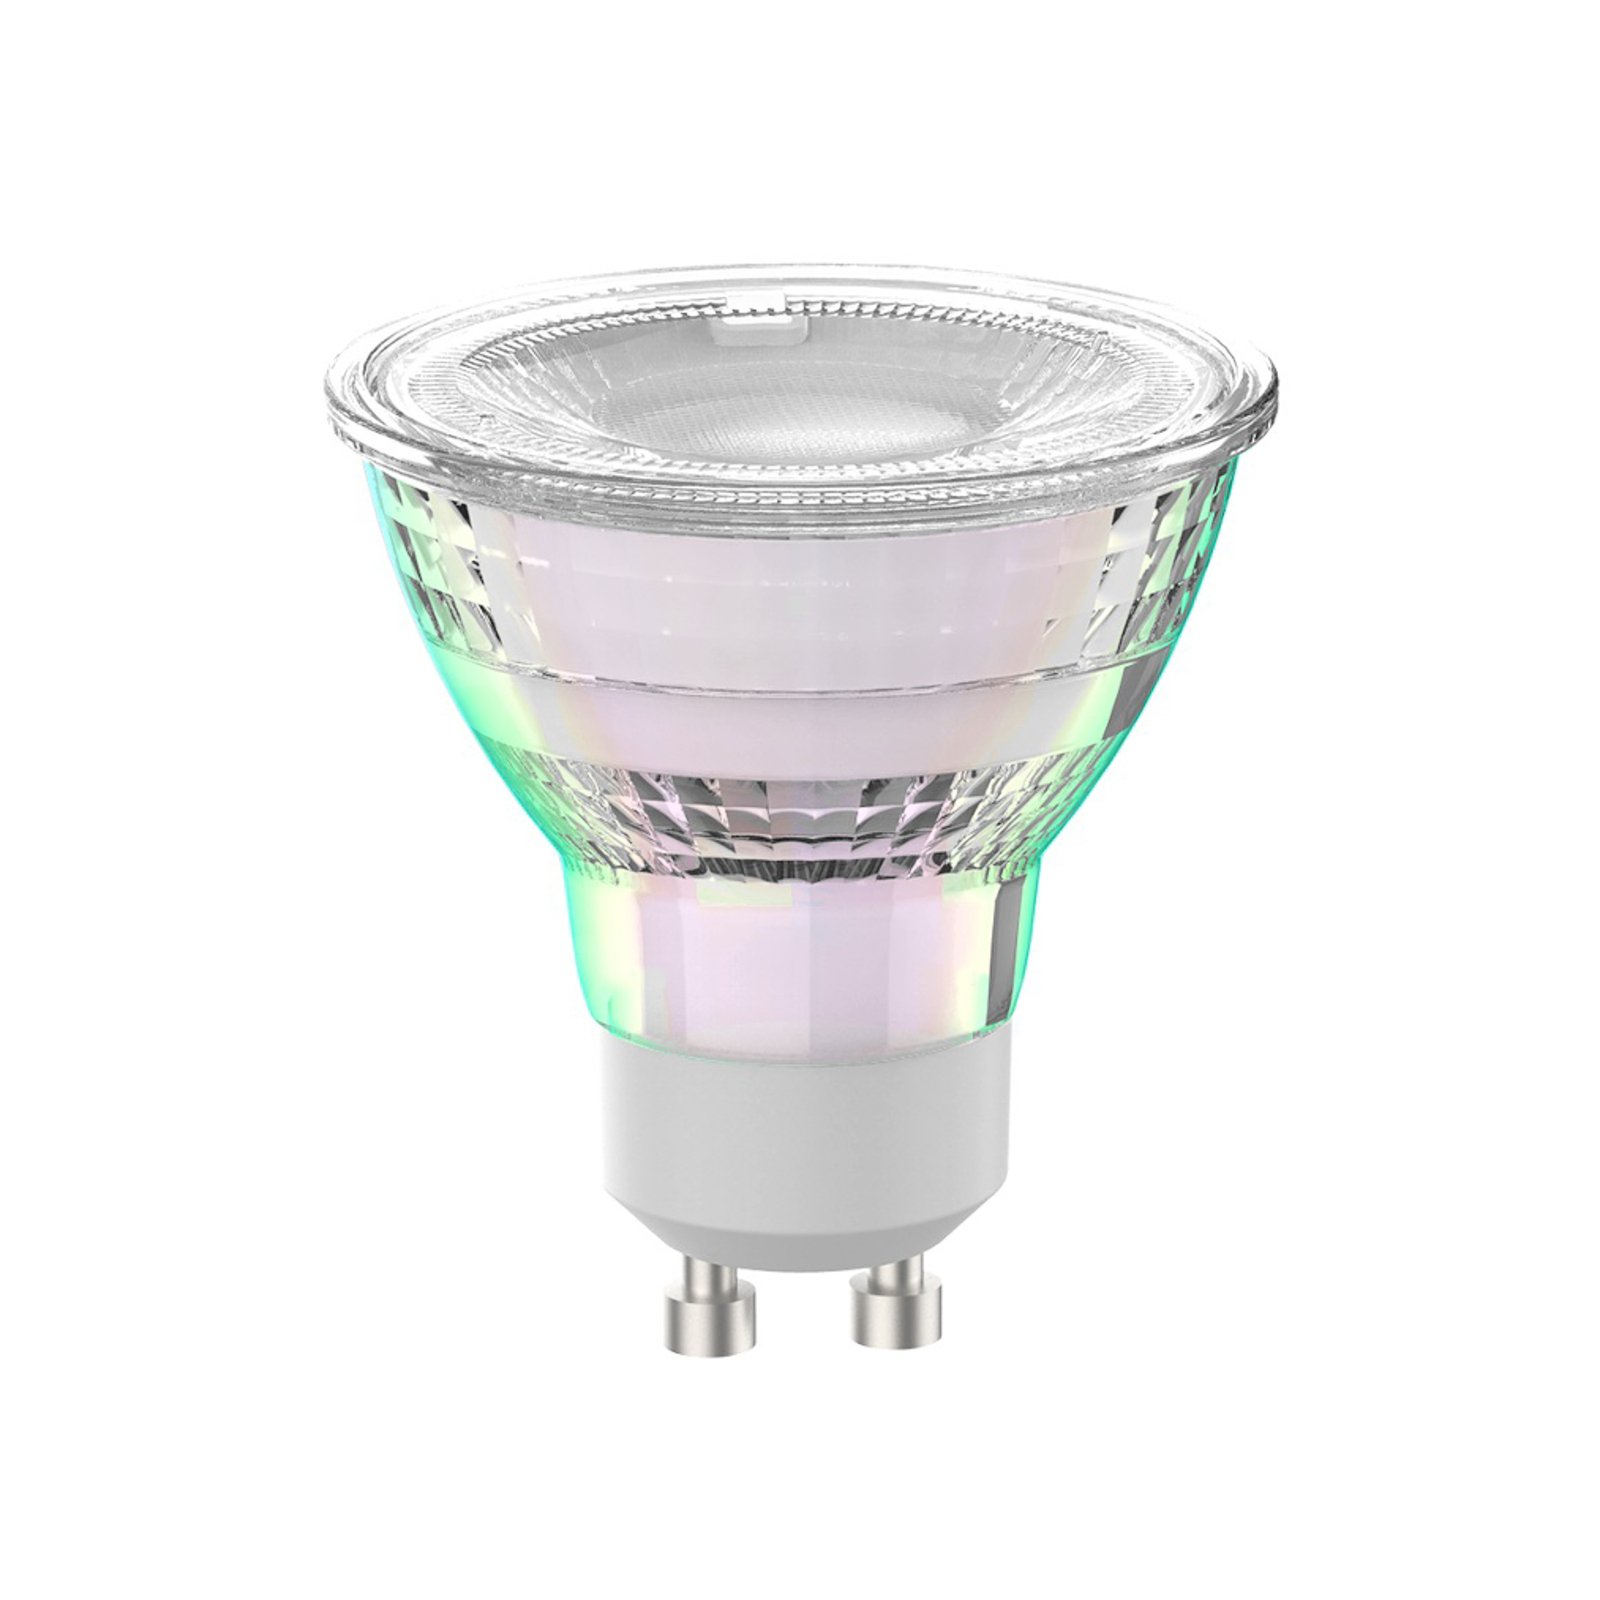 Arcchio LED-Leuchtmittel GU10 2,5W 6500K 450lm Glas 3er-Set